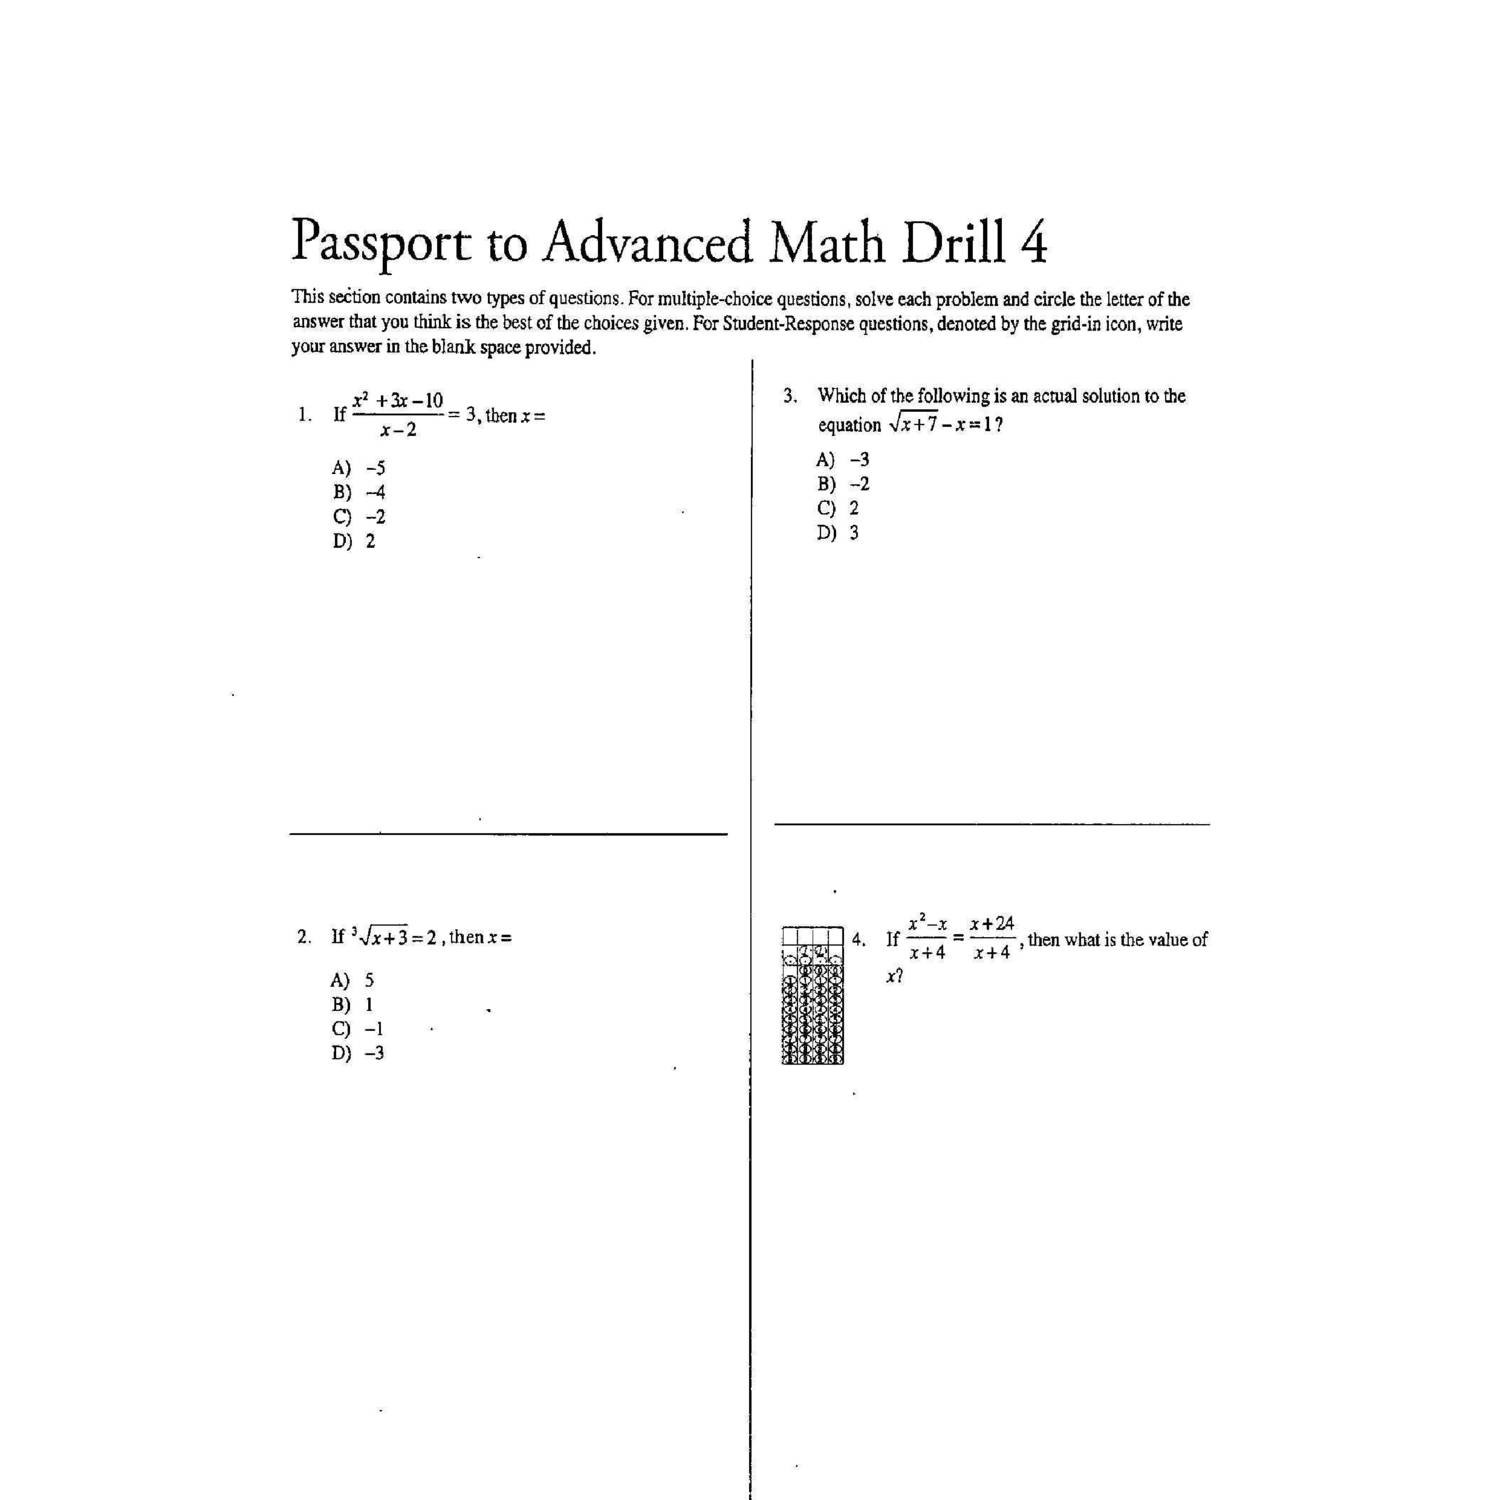 SAT Passport to Advanced Math Practice Test 4.pdf DocDroid